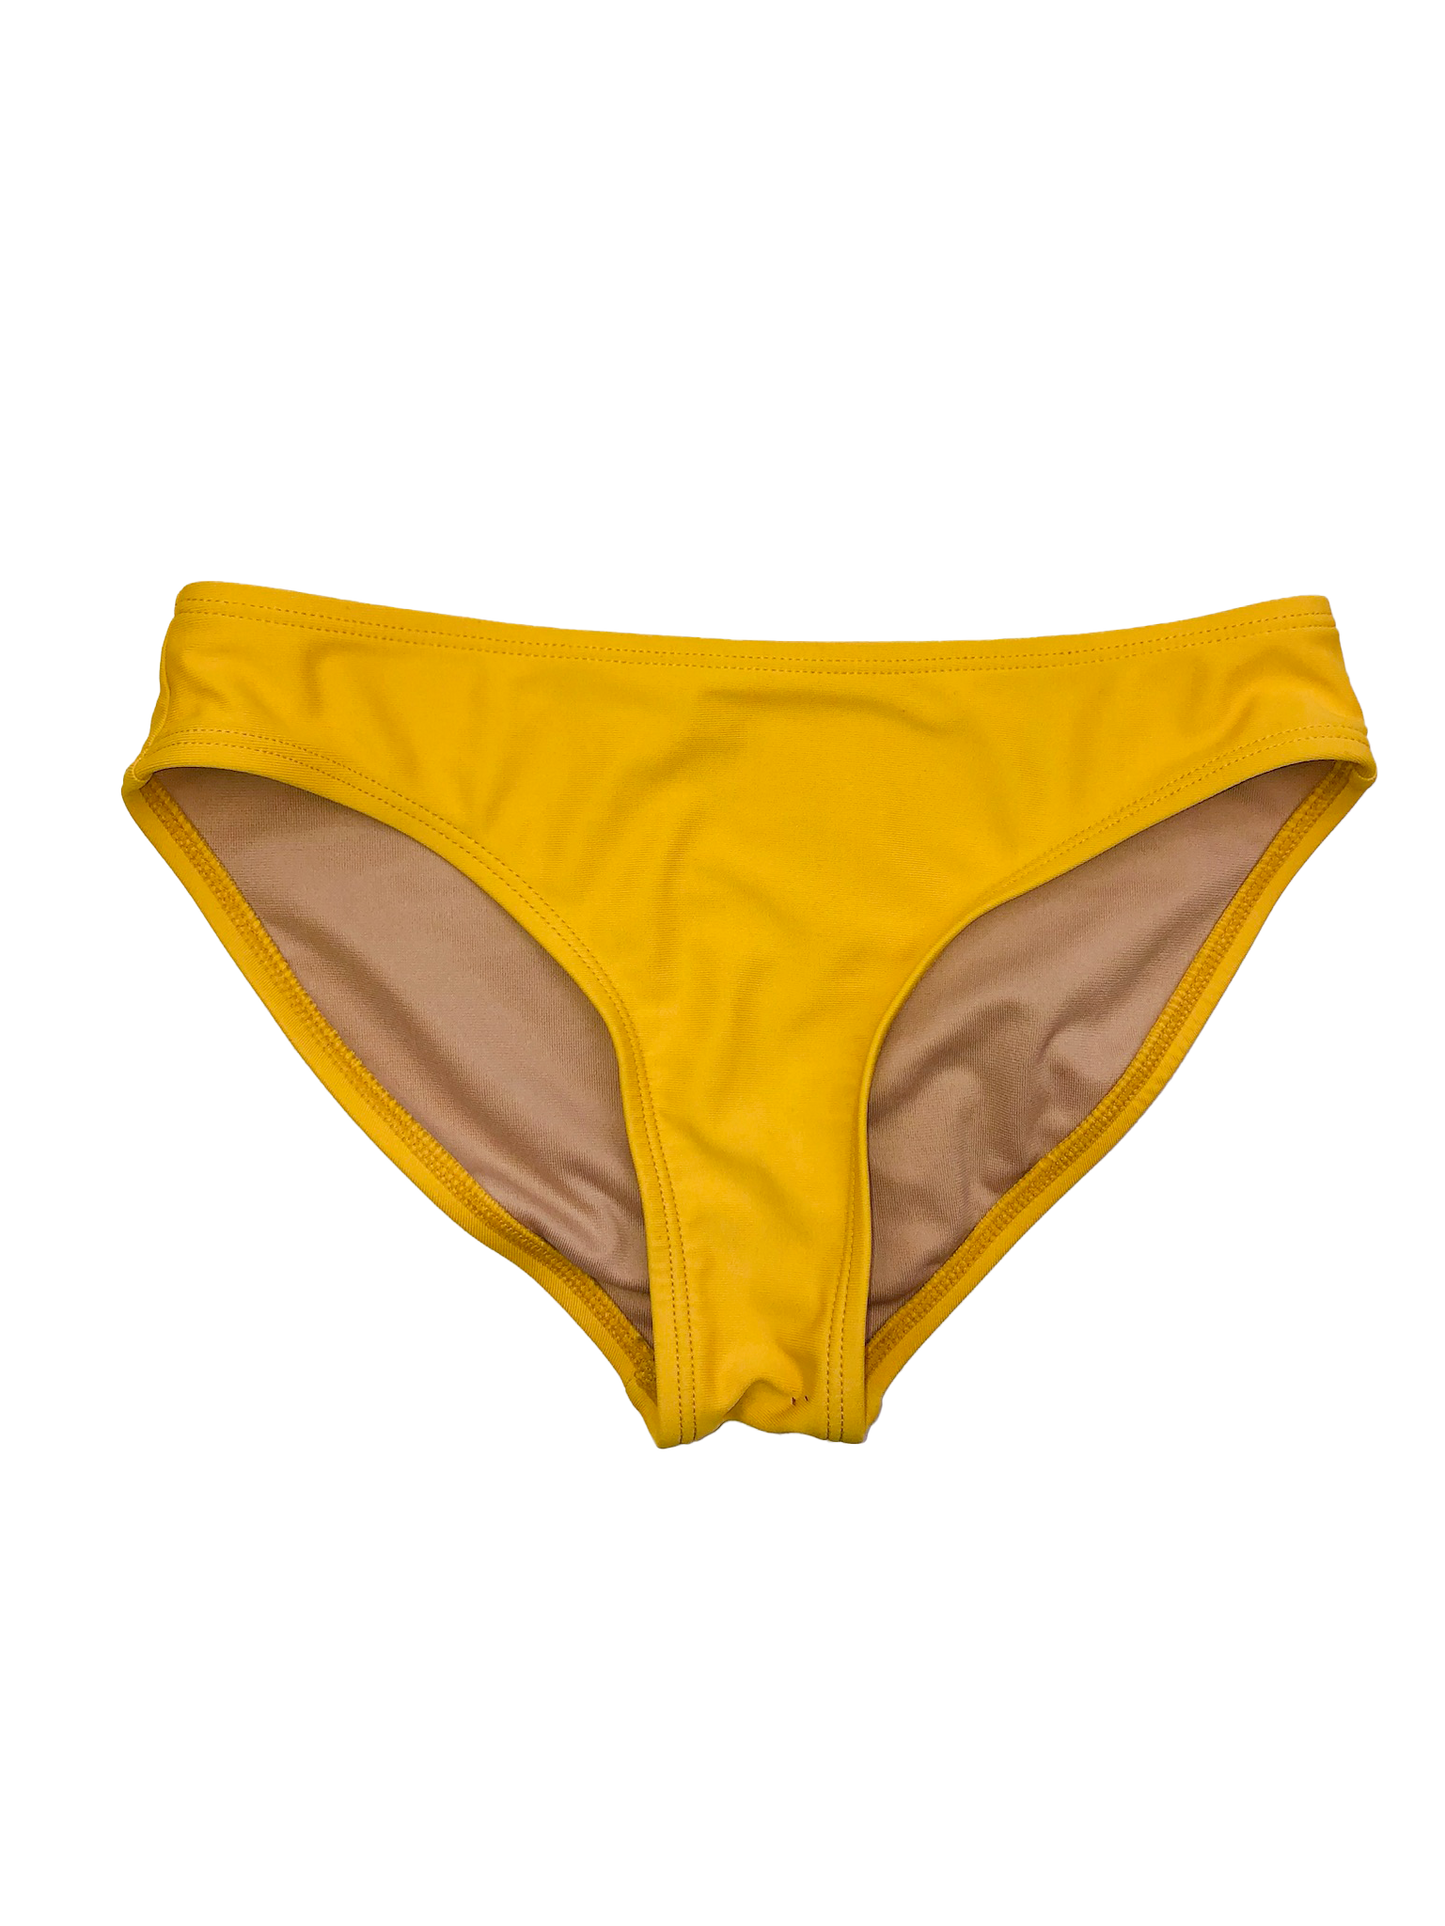 Old Navy Yellow Bikini Bottoms 8